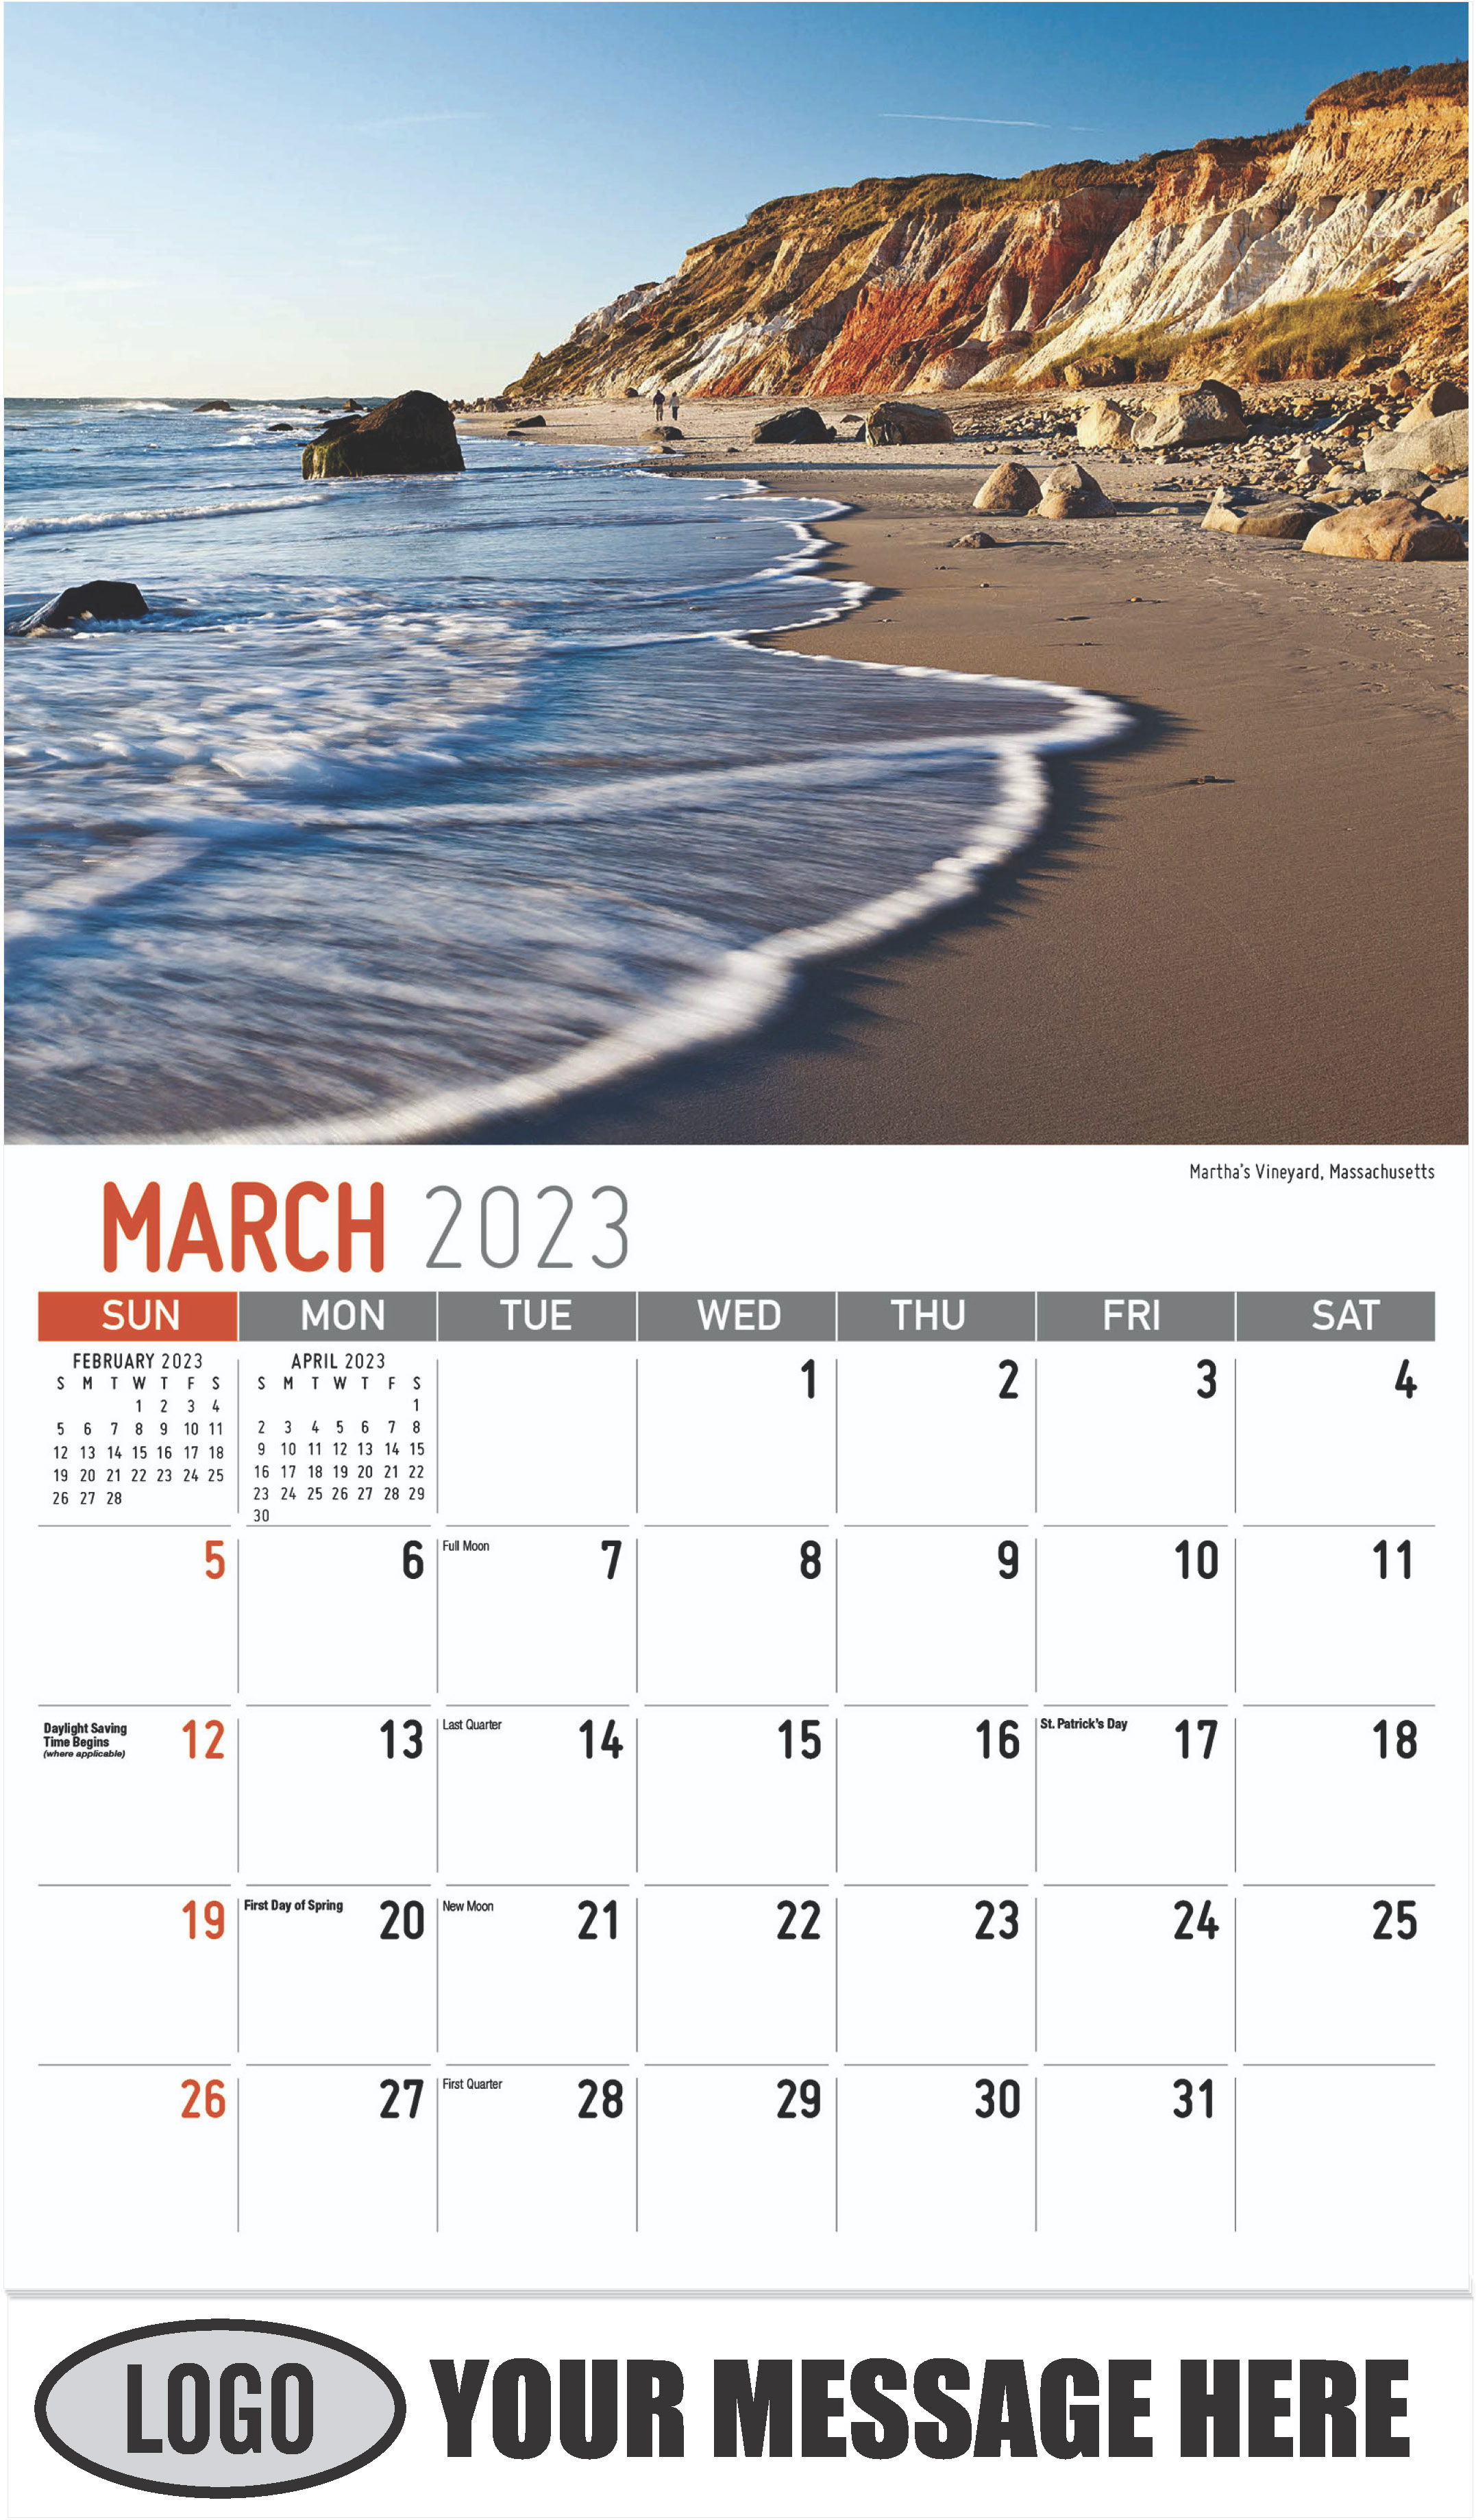 Martha’s Vineyard, Massachusetts - March - Scenes of New England 2023 Promotional Calendar